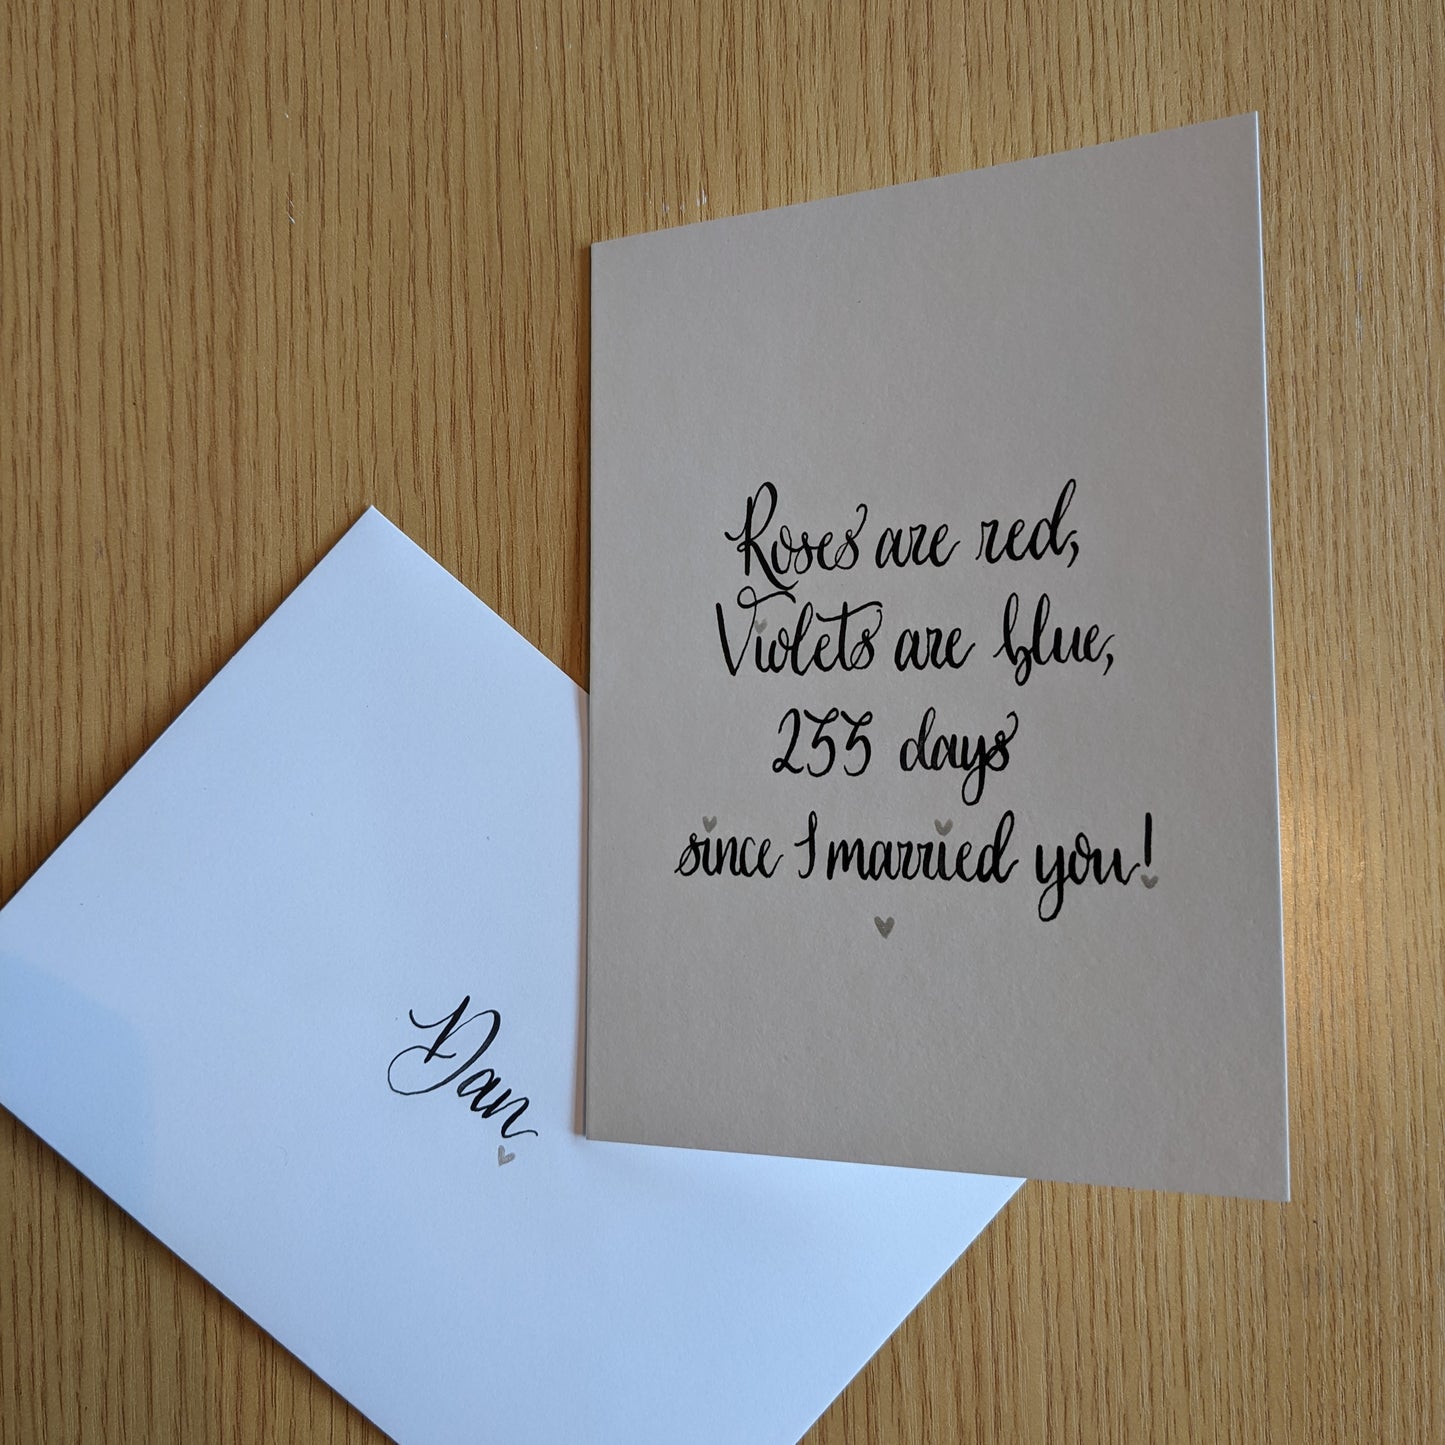 Valentines' cards